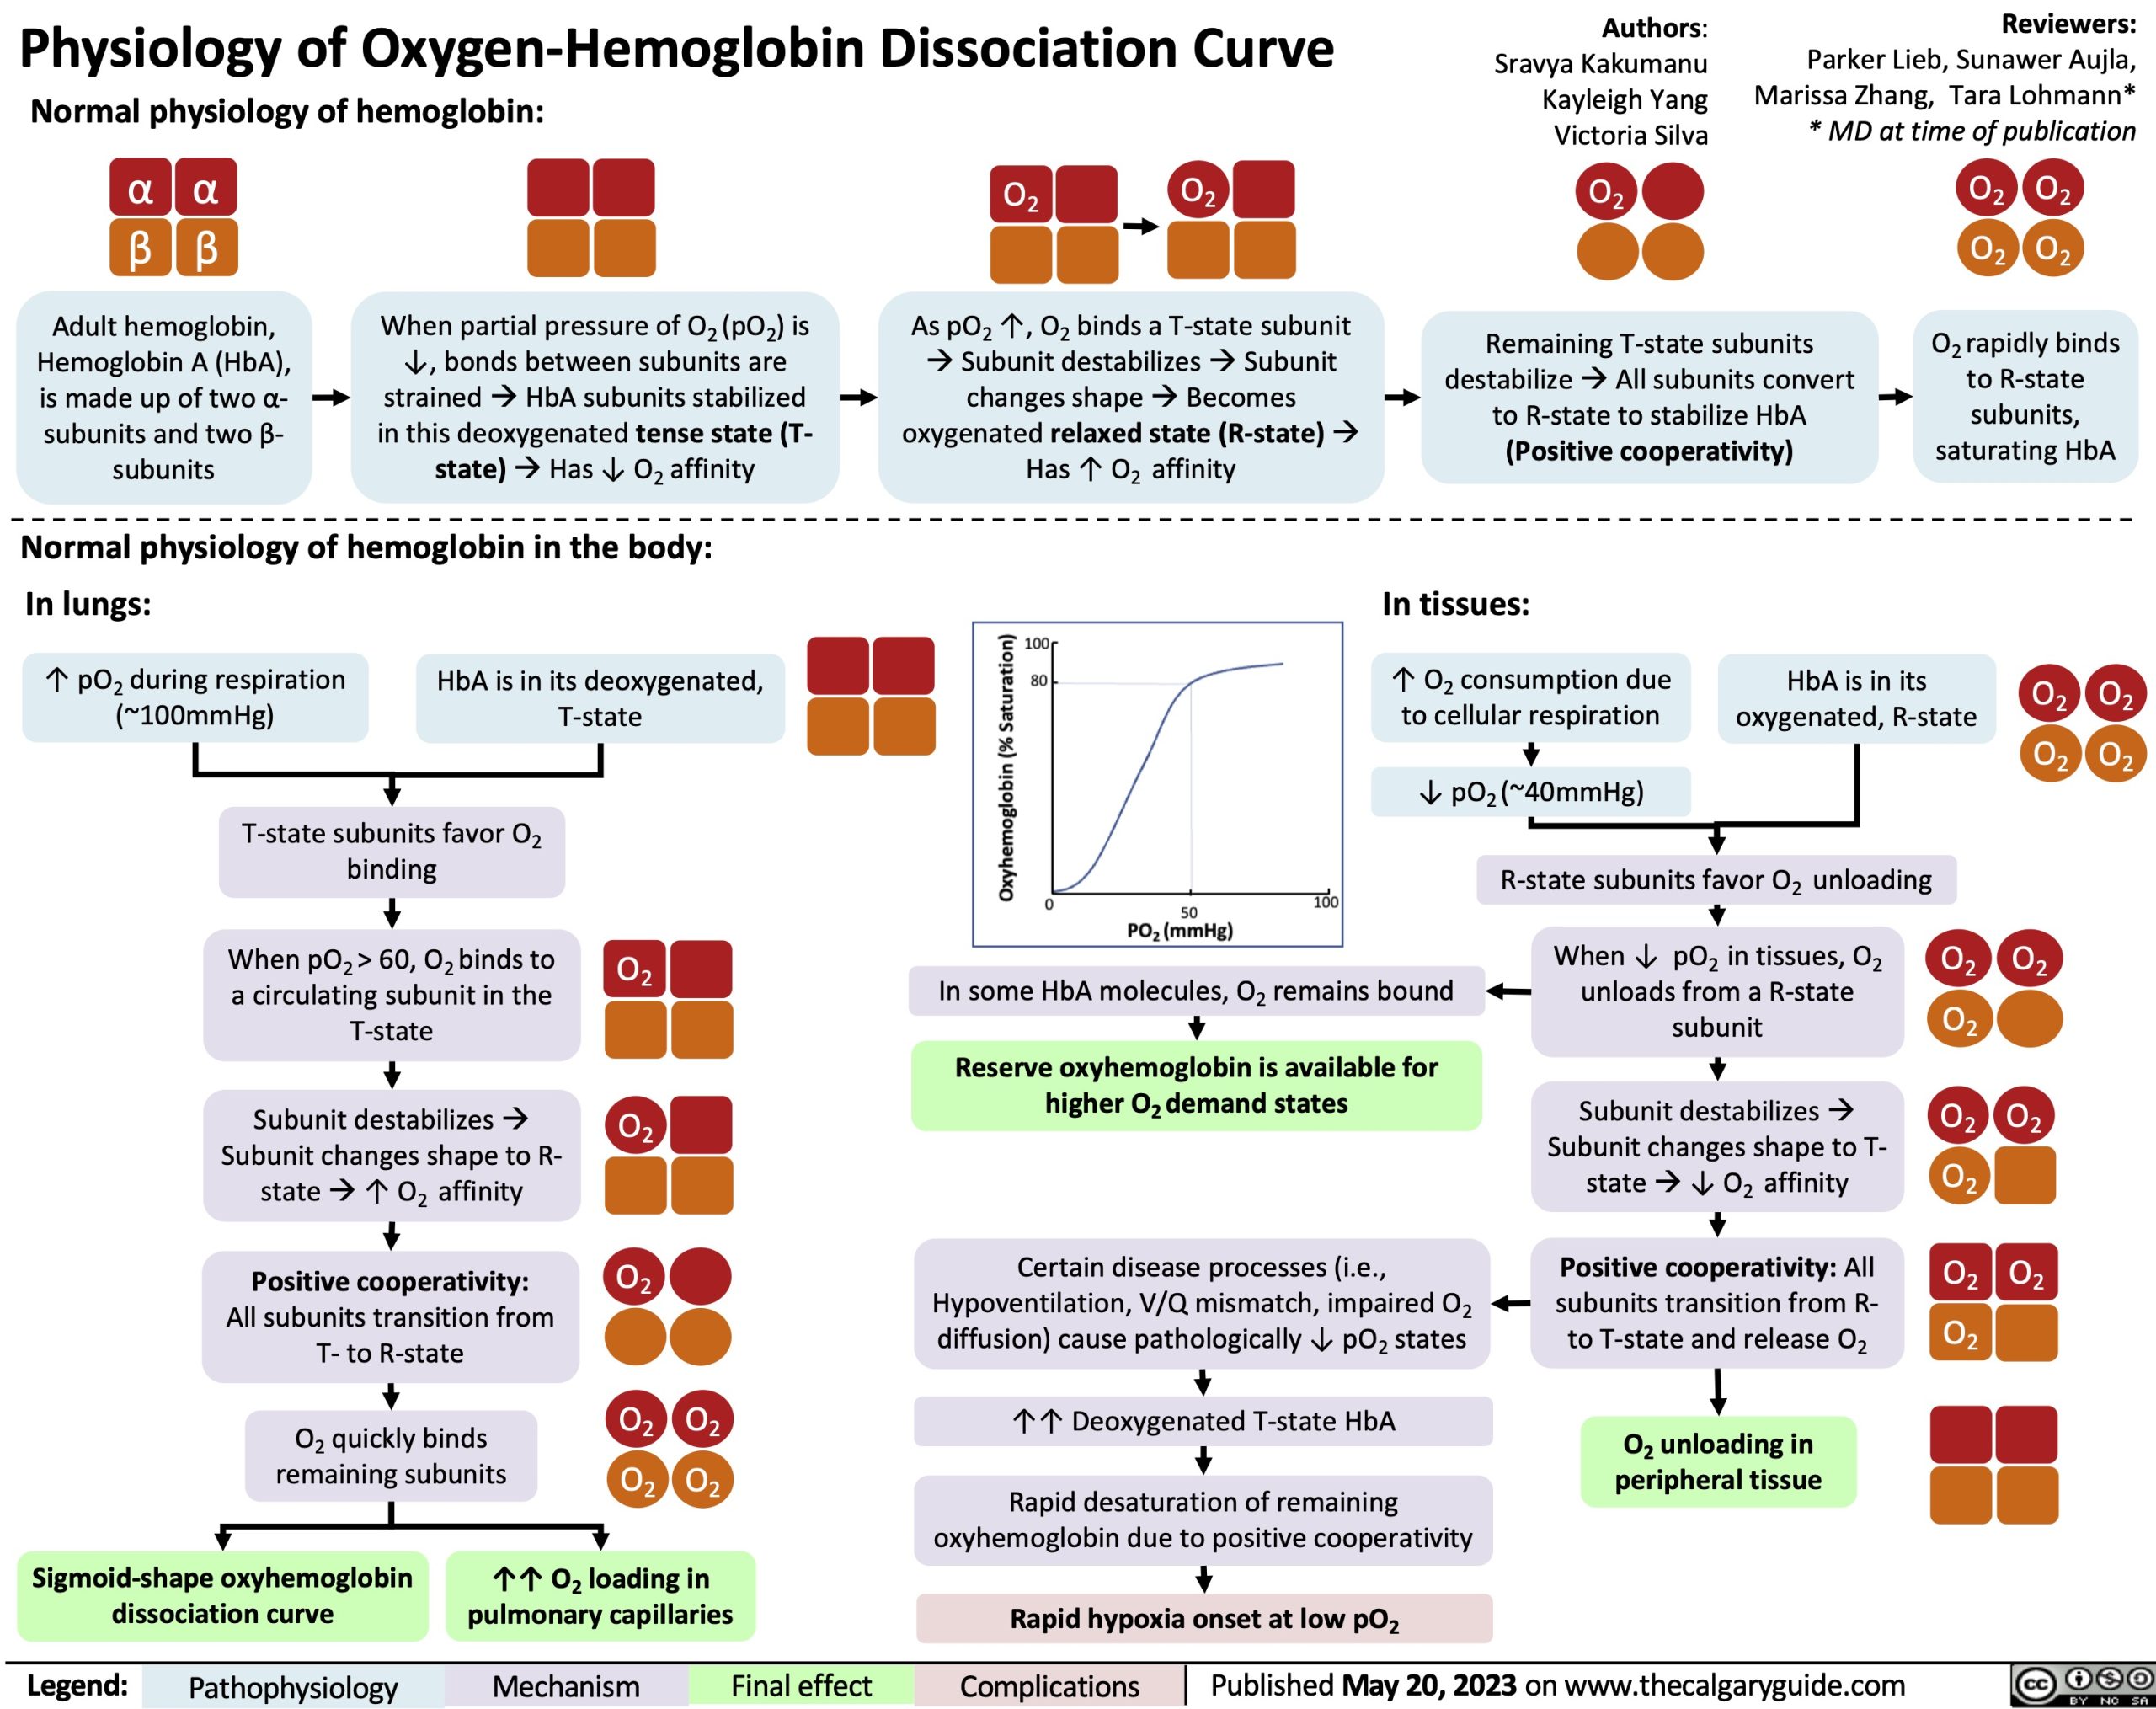 https://calgaryguide.ucalgary.ca/wp-content/uploads/2023/05/Oxygen-Hemoglobin-Dissociation-Curve-1-scaled.jpg